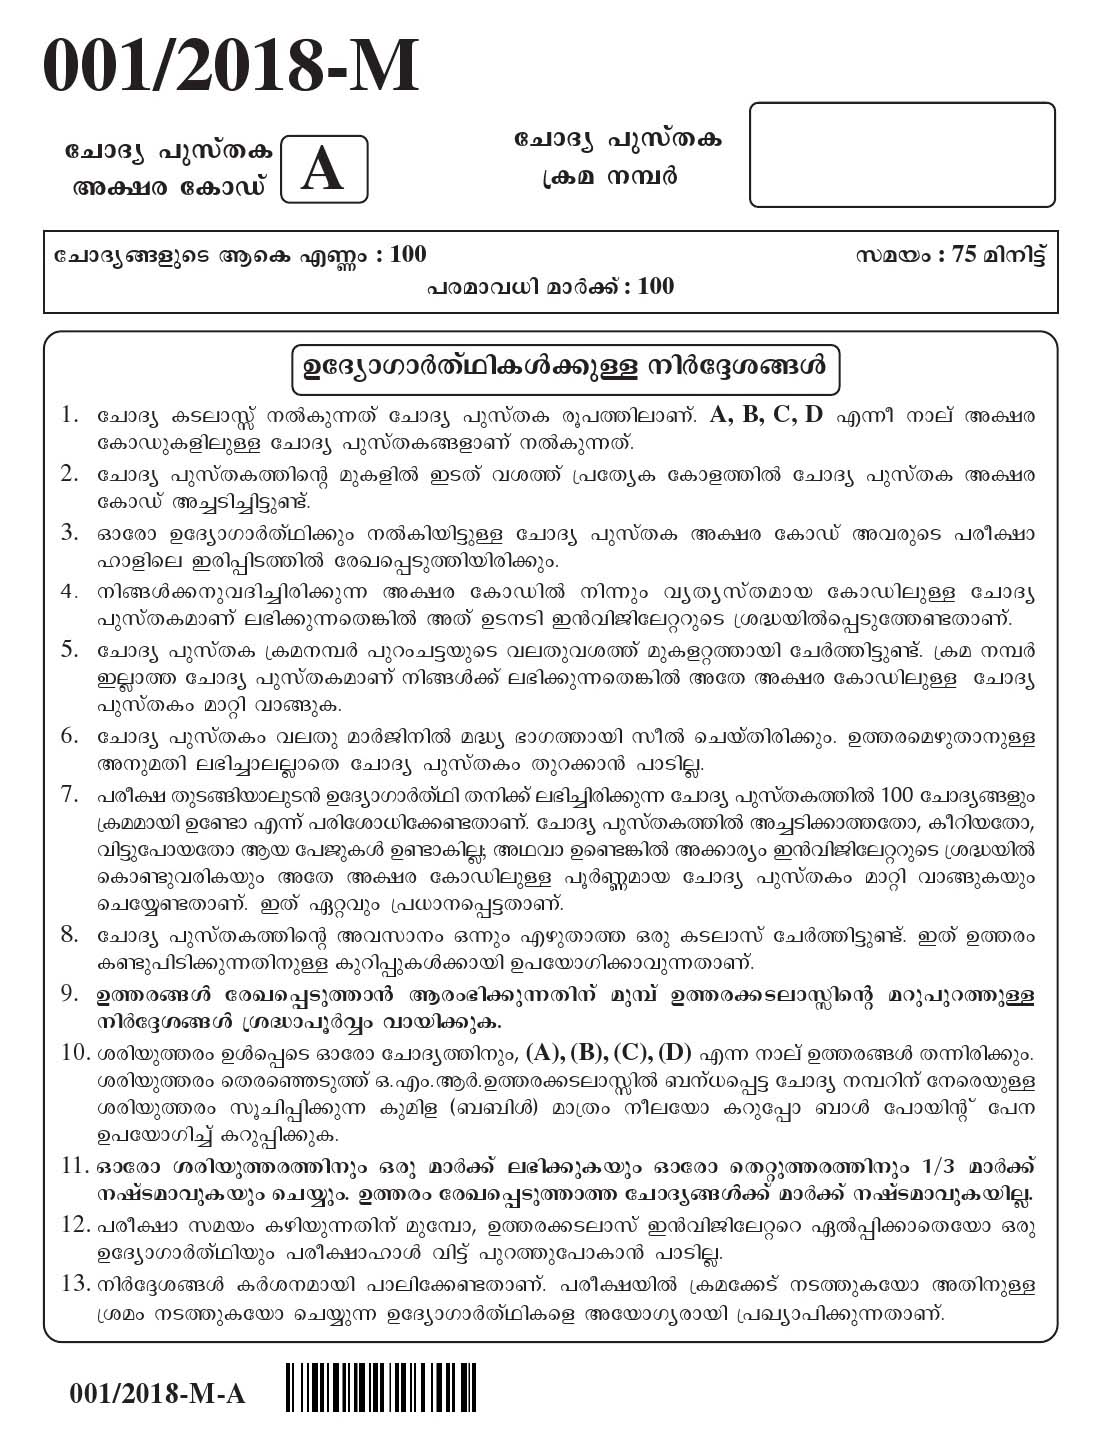 Kerala PSC High School Assistant Malayalam Question Code 0012018 M 1